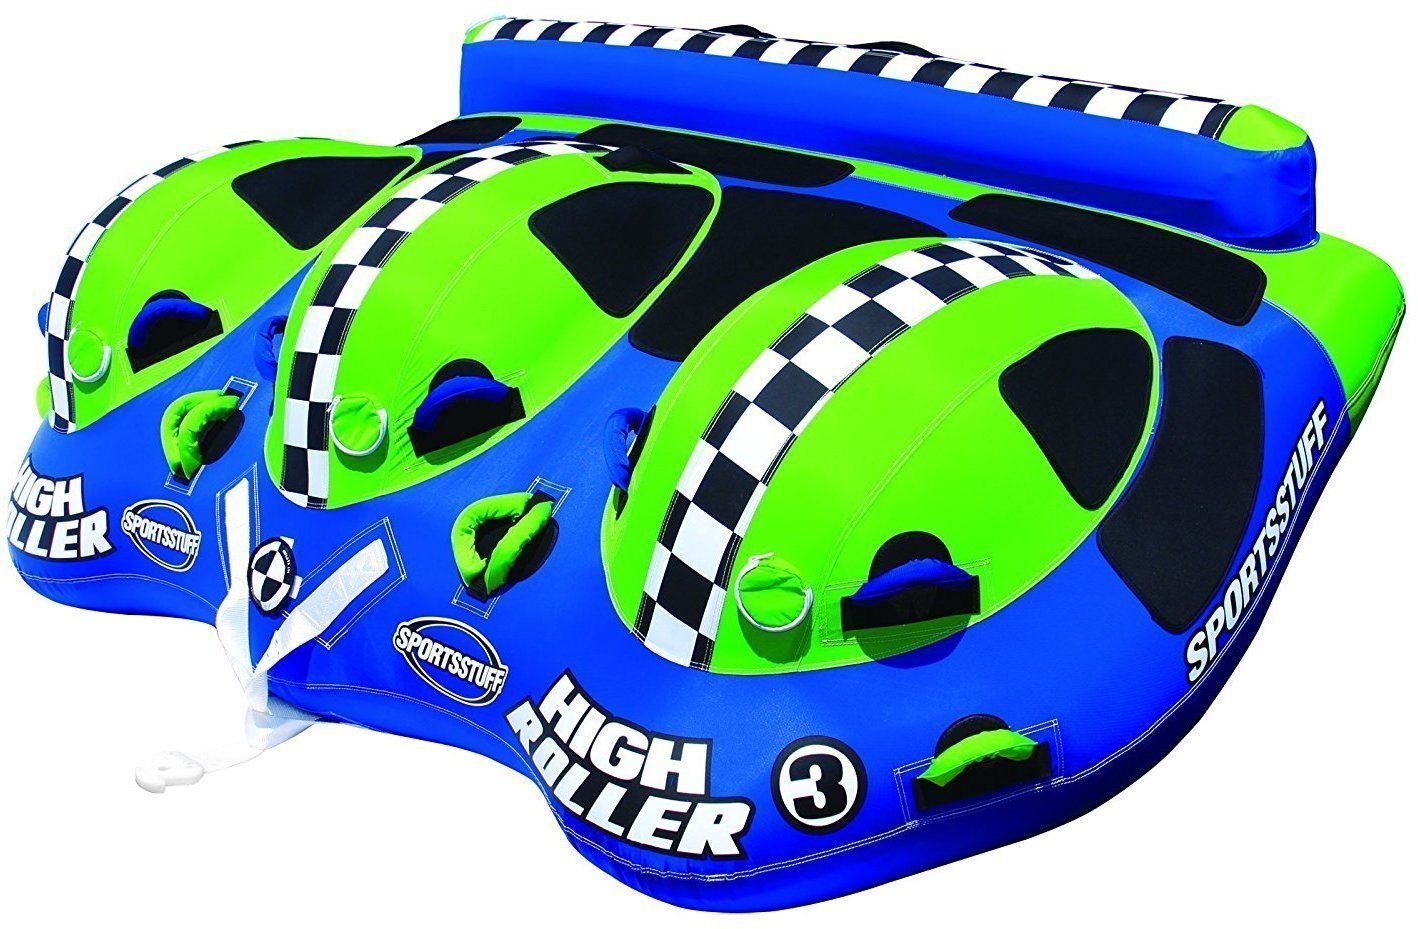 Fun Tube Sportsstuff Towable High Roller 3 Personen Blue/Green